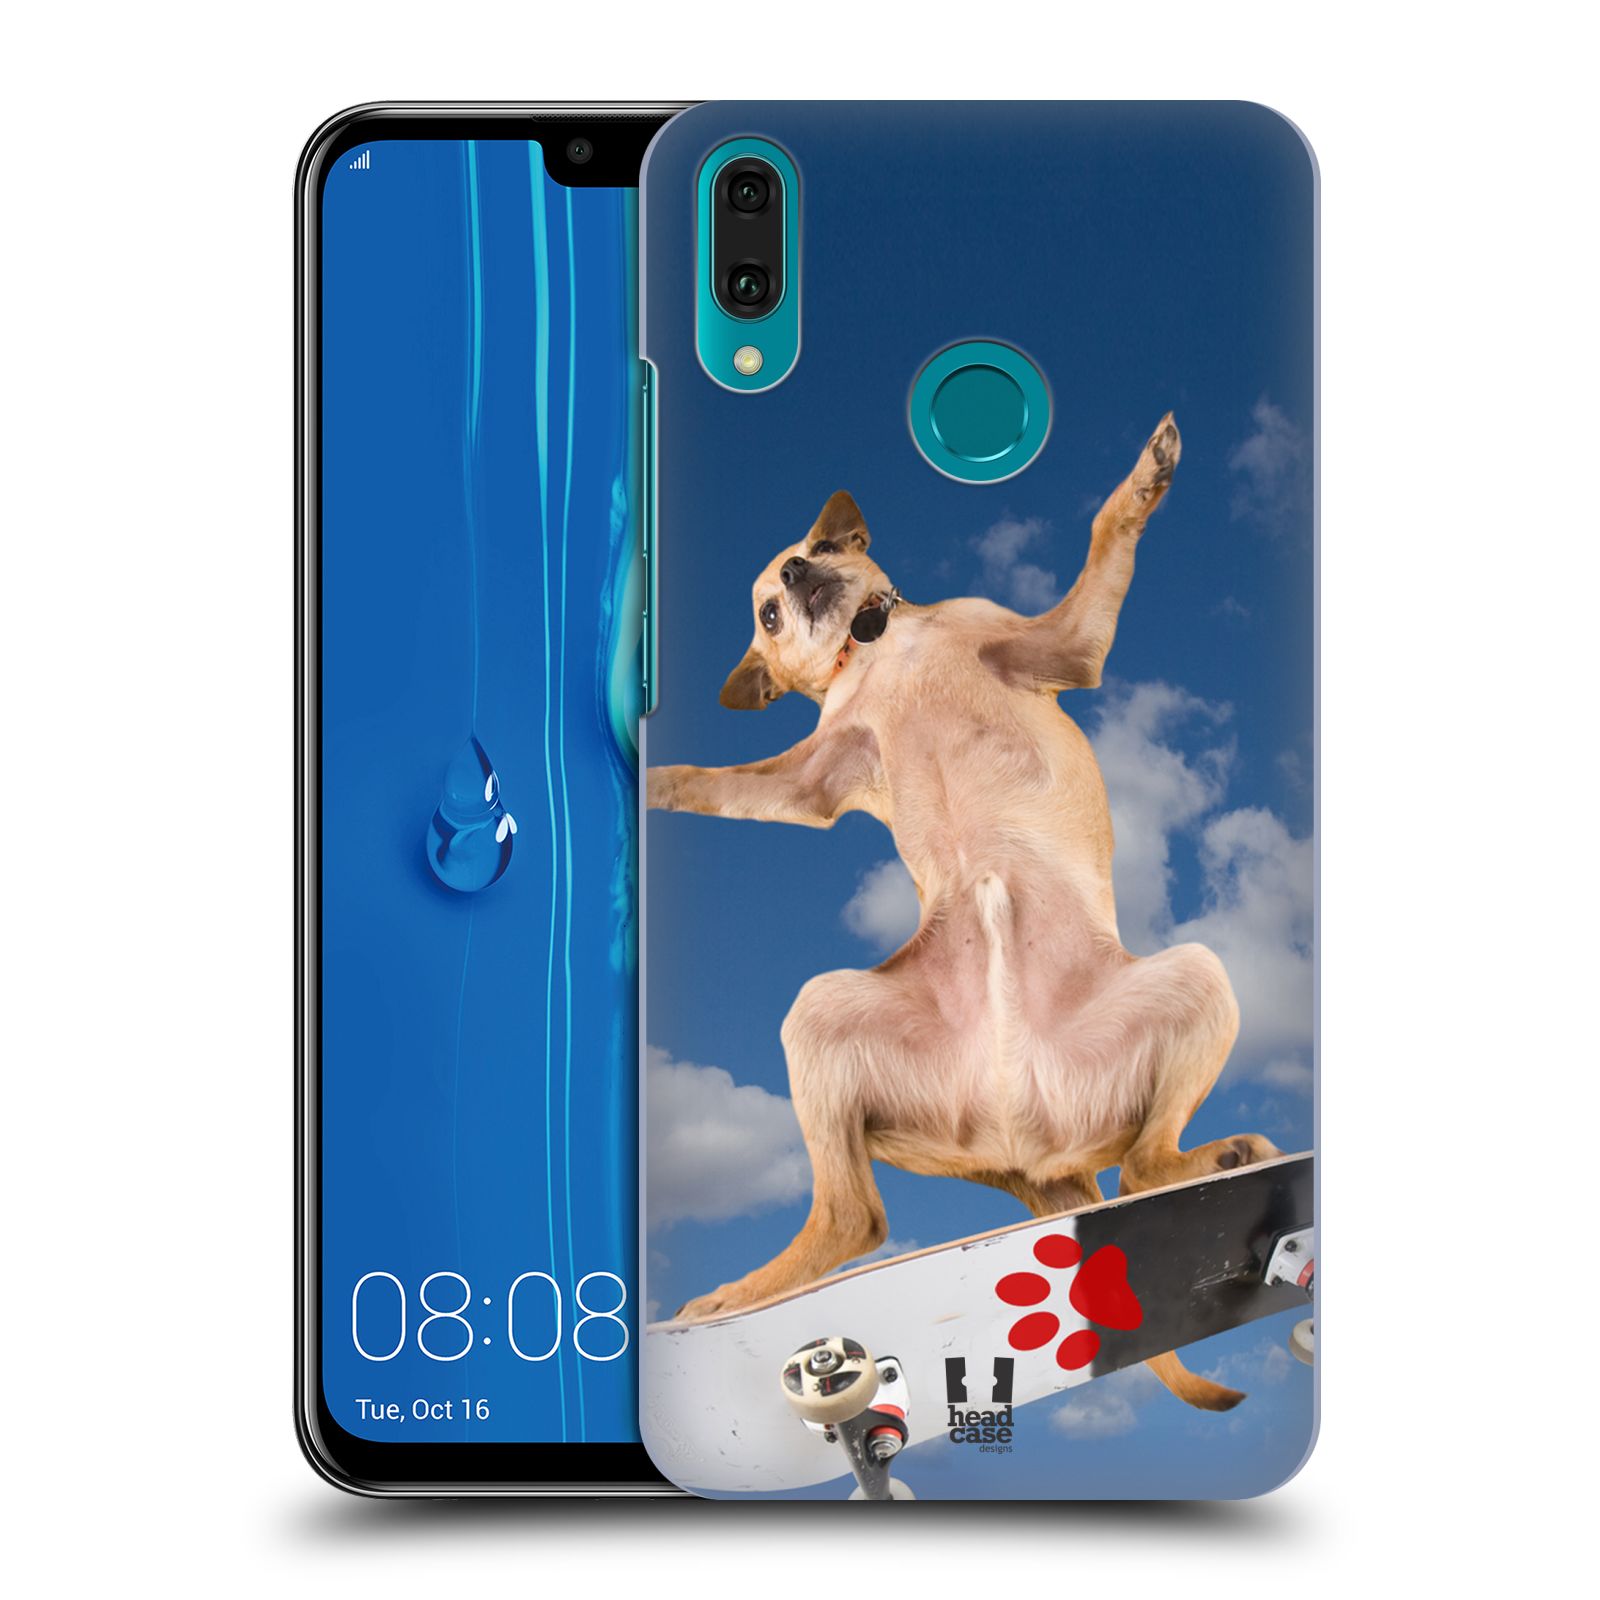 Pouzdro na mobil Huawei Y9 2019 - HEAD CASE - vzor Legrační zvířátka pejsek skateboard